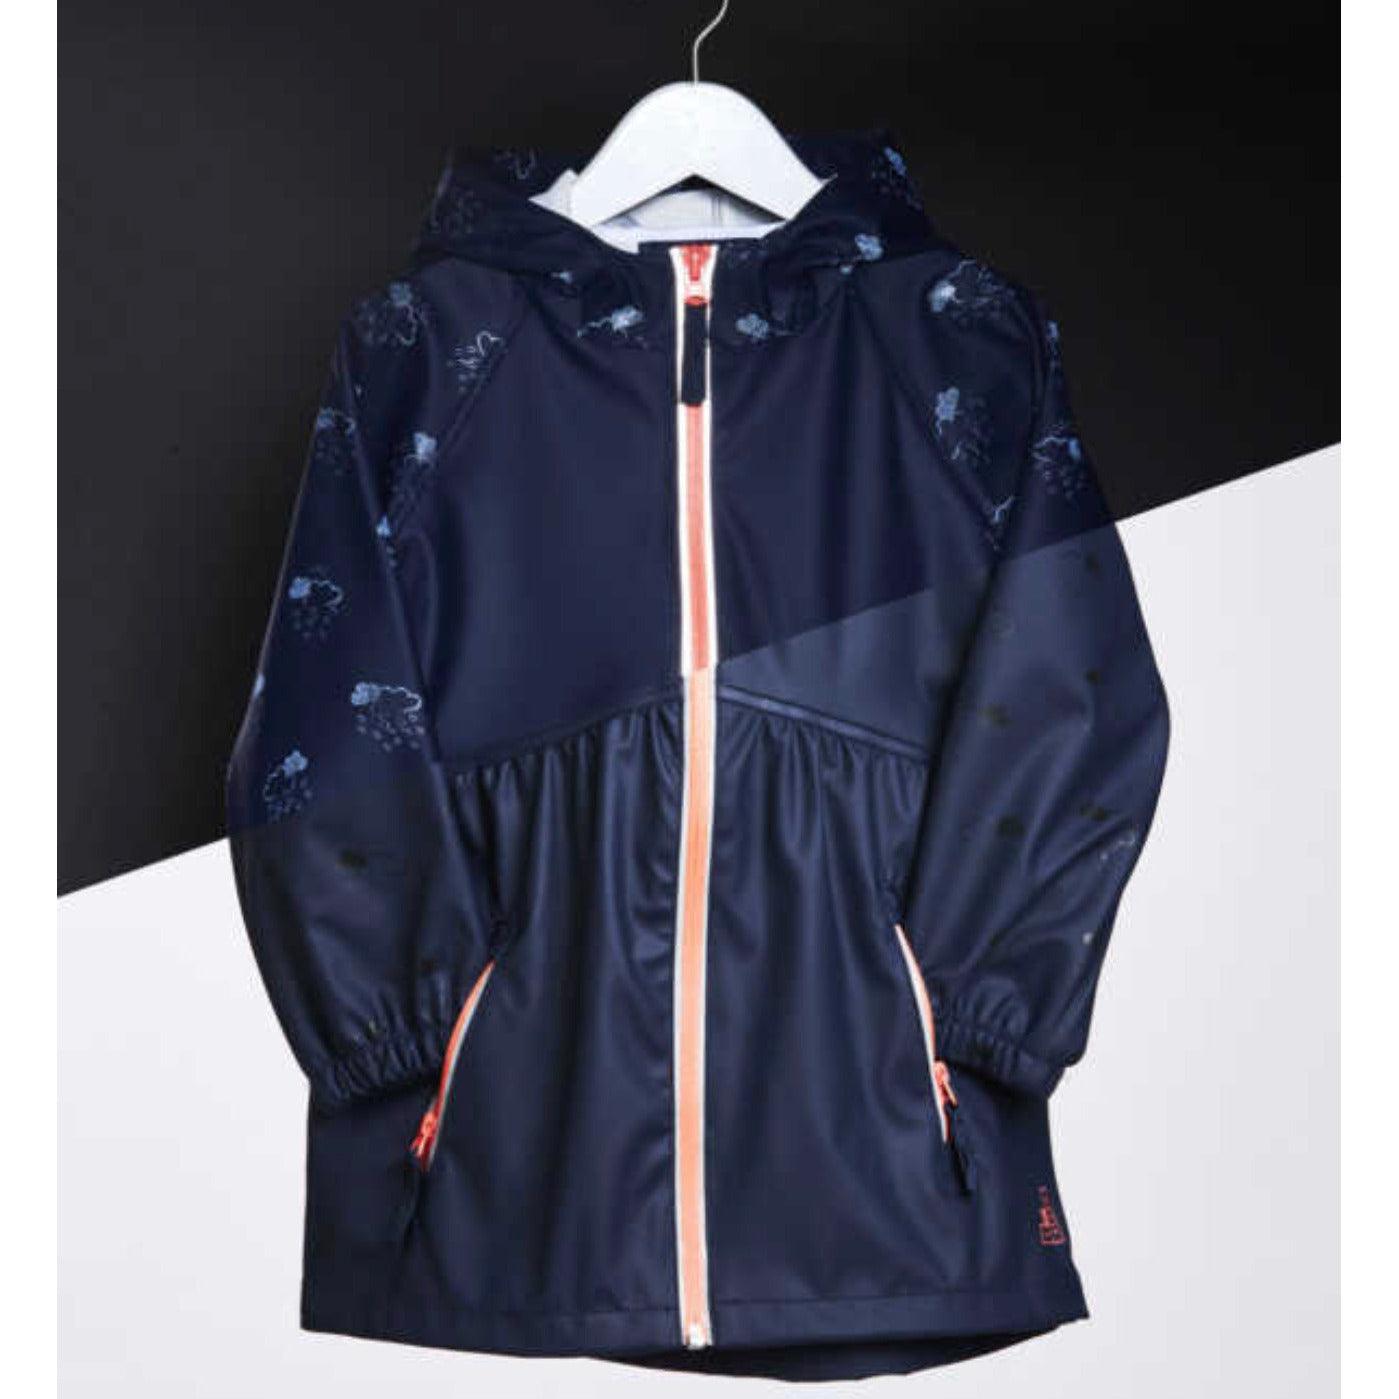 The North Face Warm Storm Rain Jacket - Winter Jacket Girls | Buy online |  Alpinetrek.co.uk